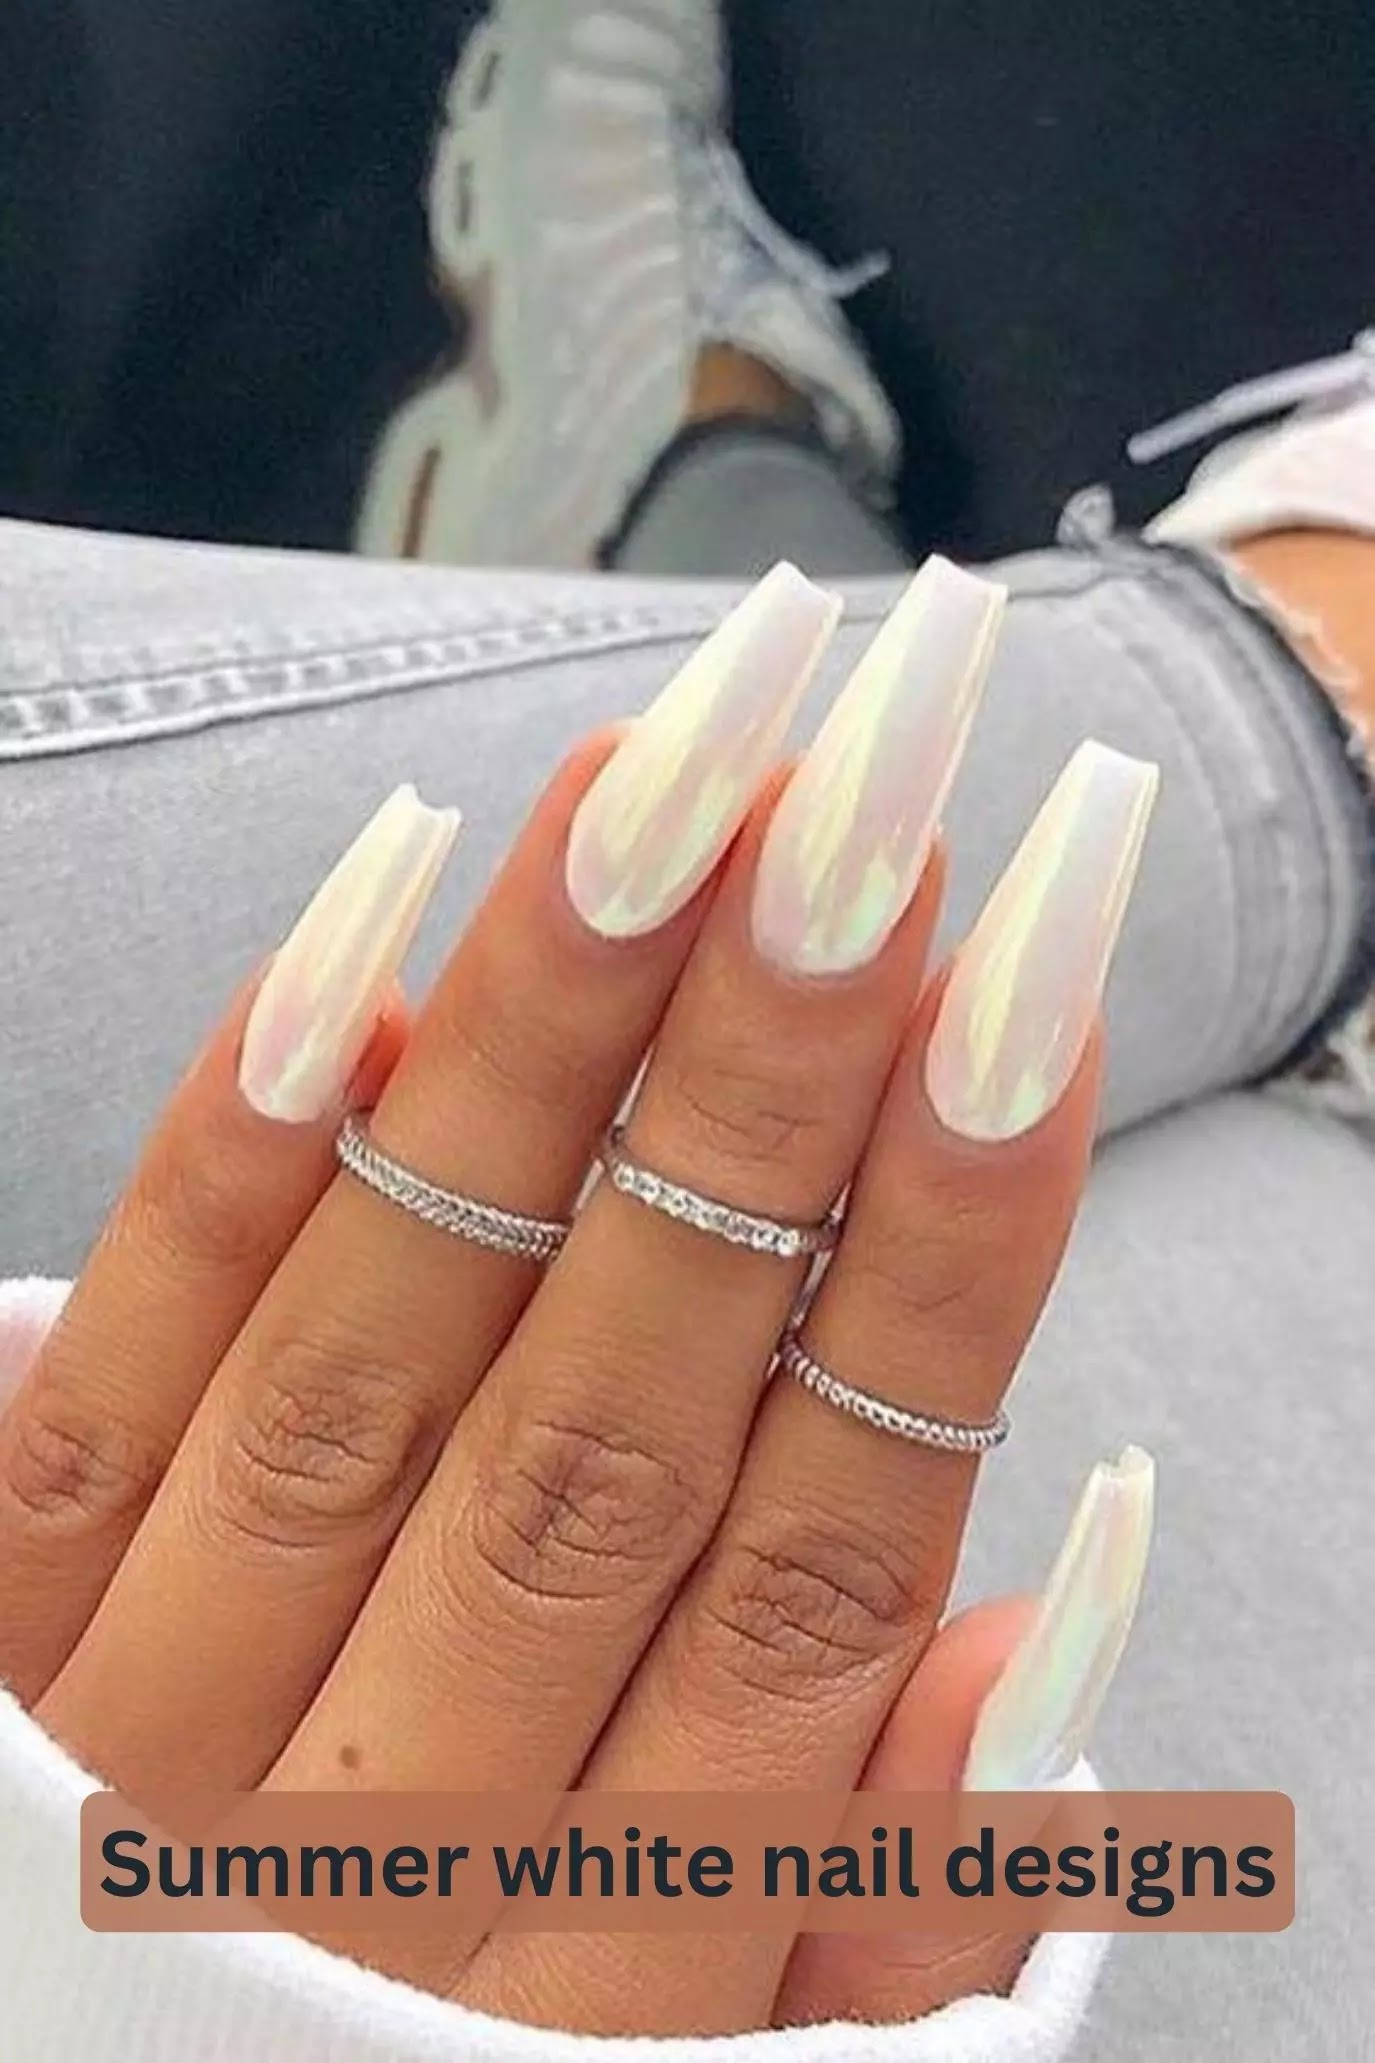 Summer white nail designs